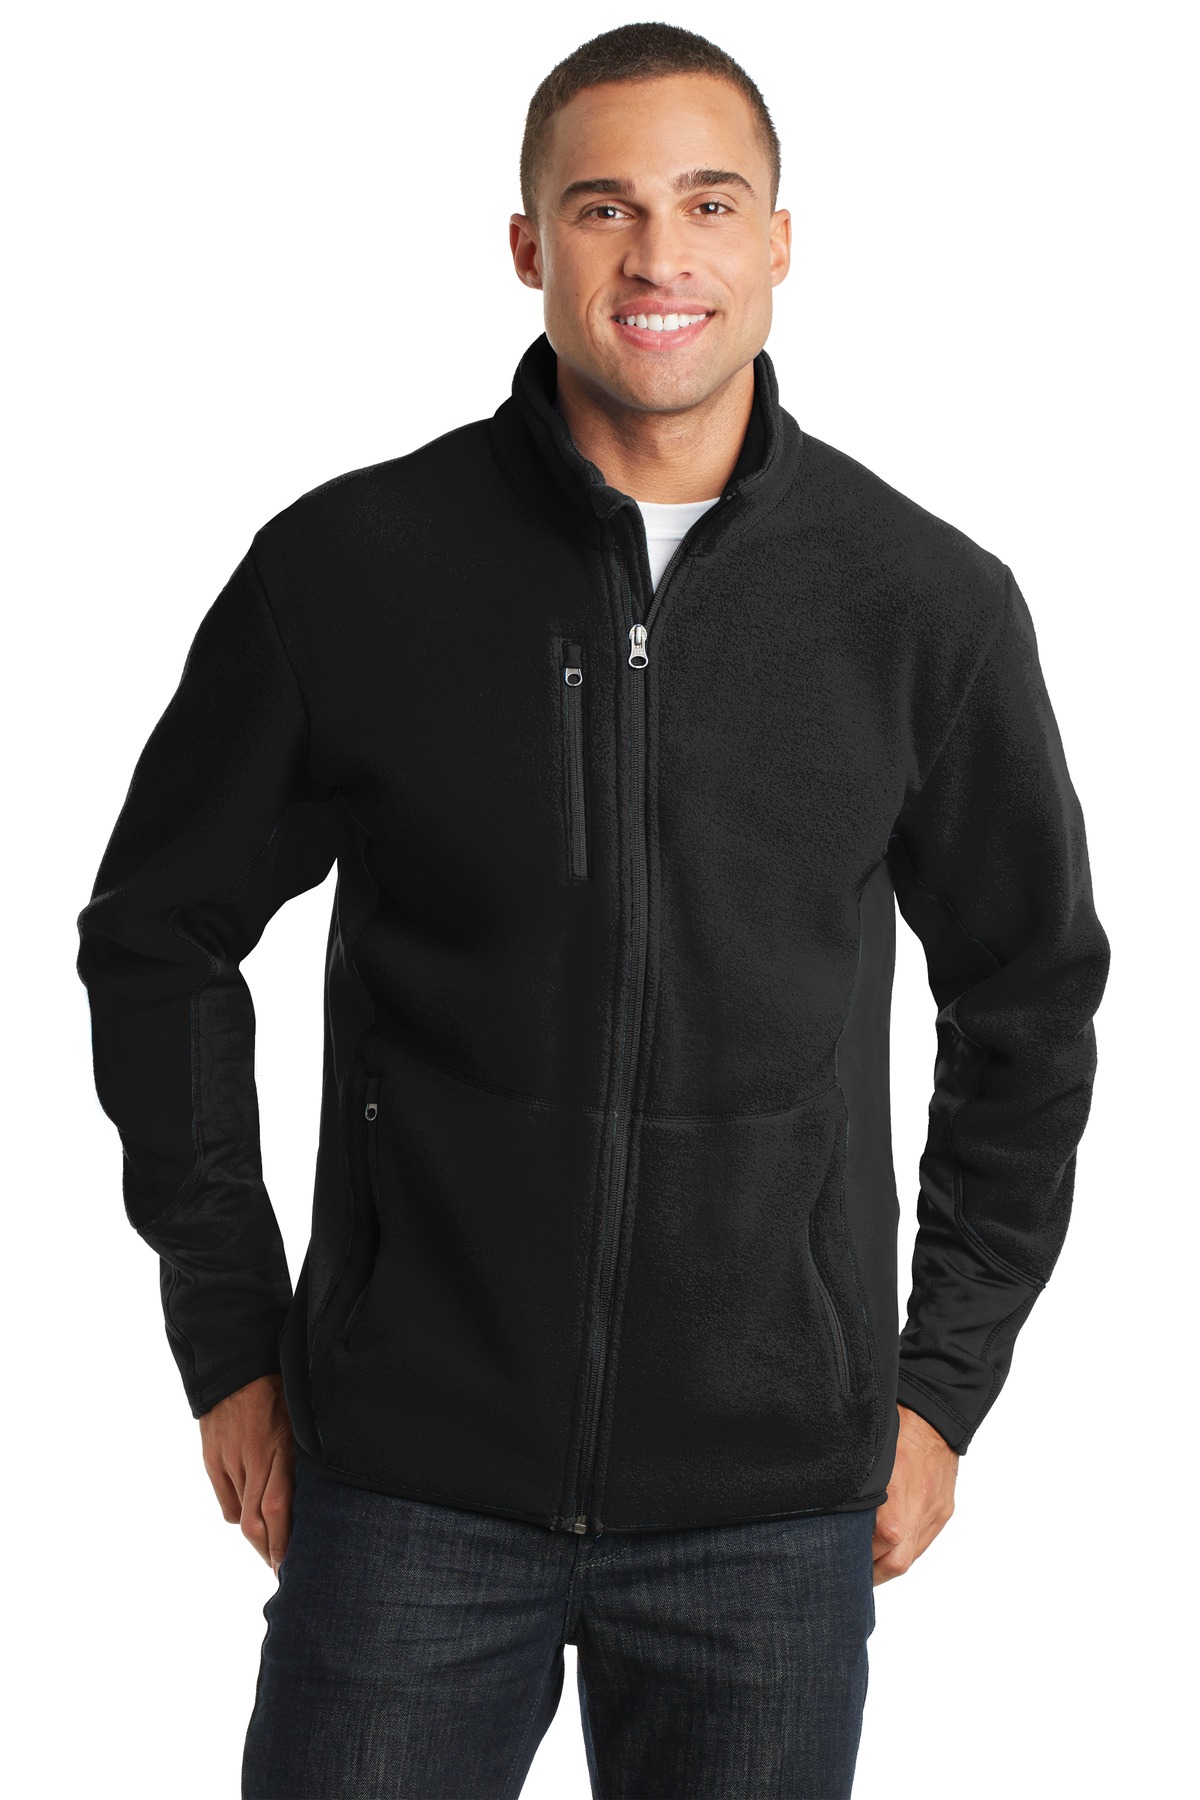 Port Authority Outerwear, Sweat shirts & Fleece for Hospitality ® R-Tek® Pro Fleece Full-Zip Jacket.-Port Authority